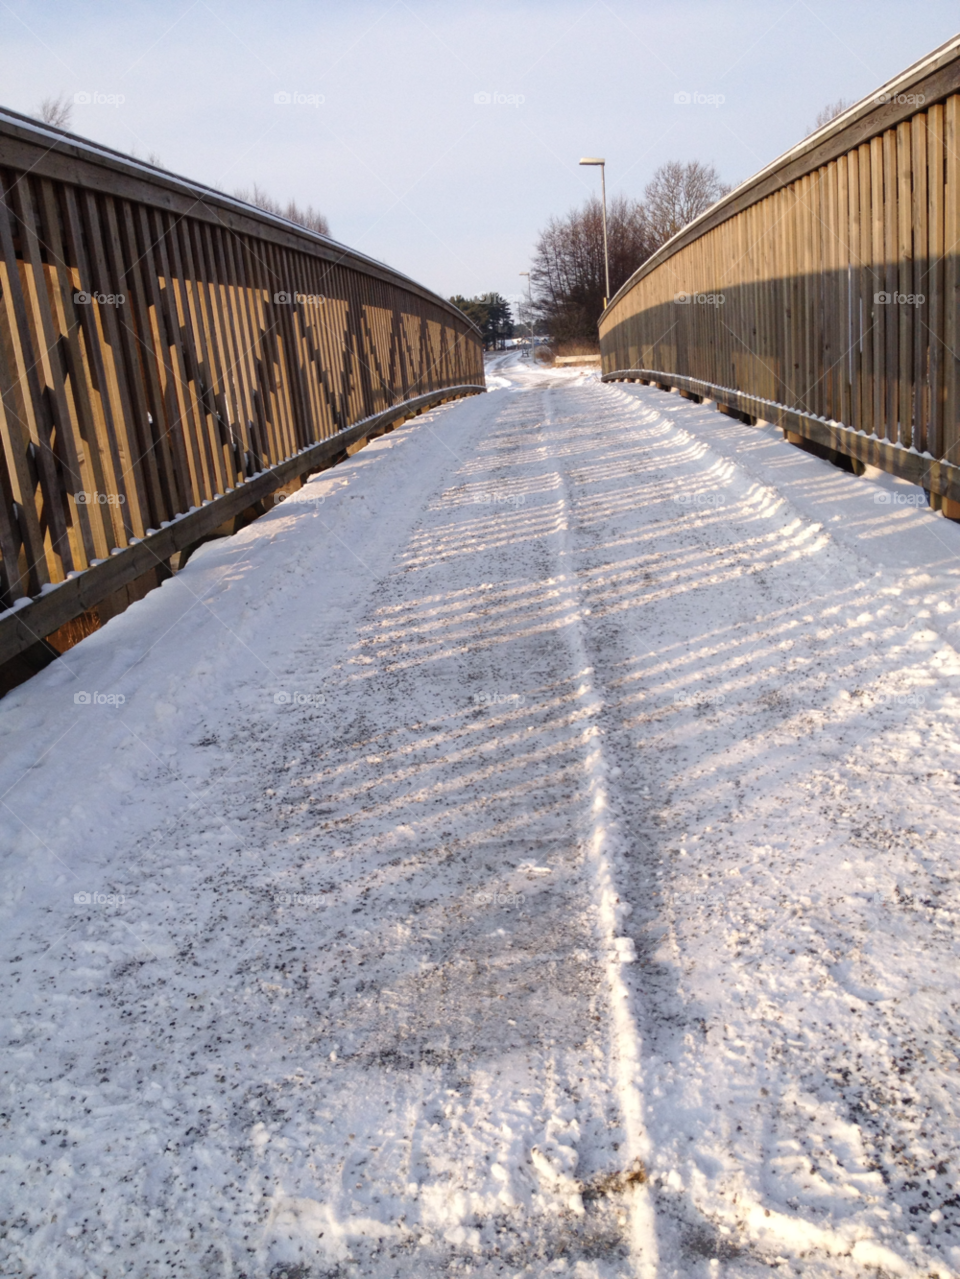 snow sun bridge by liselott